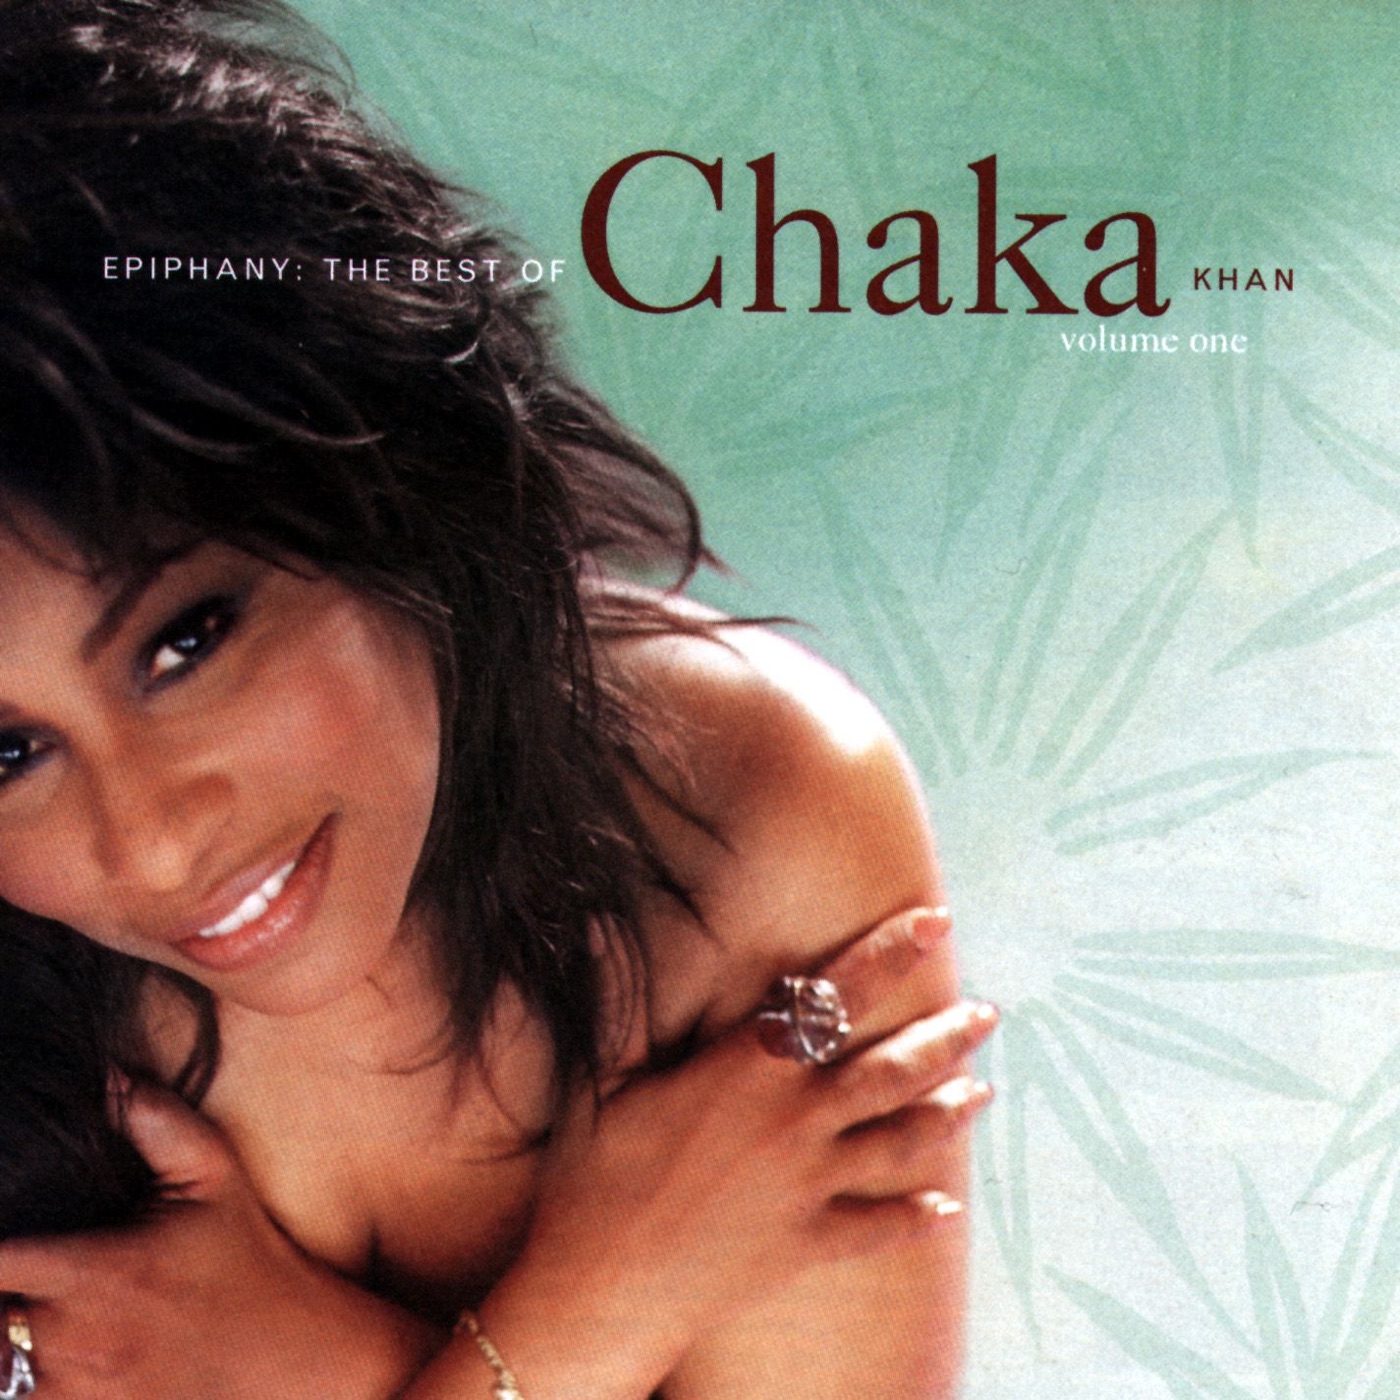 Epiphany: The Best of Chaka Khan, Vol. 1 by Chaka Khan